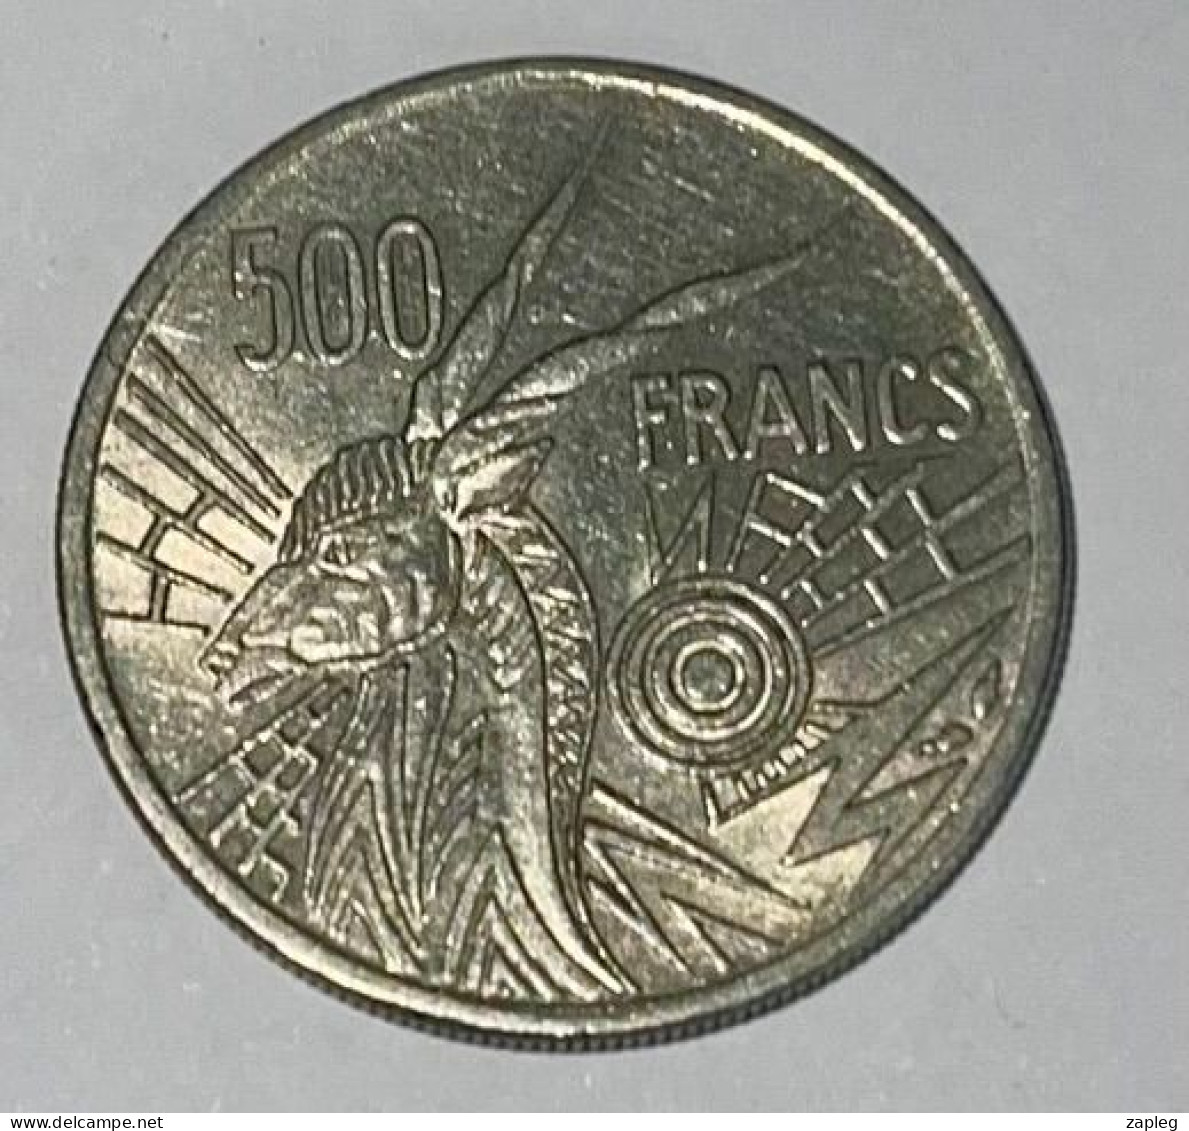 Afrique Centrale (BEAC) 500 Francs, 1976 - Cameroun - Cameroon